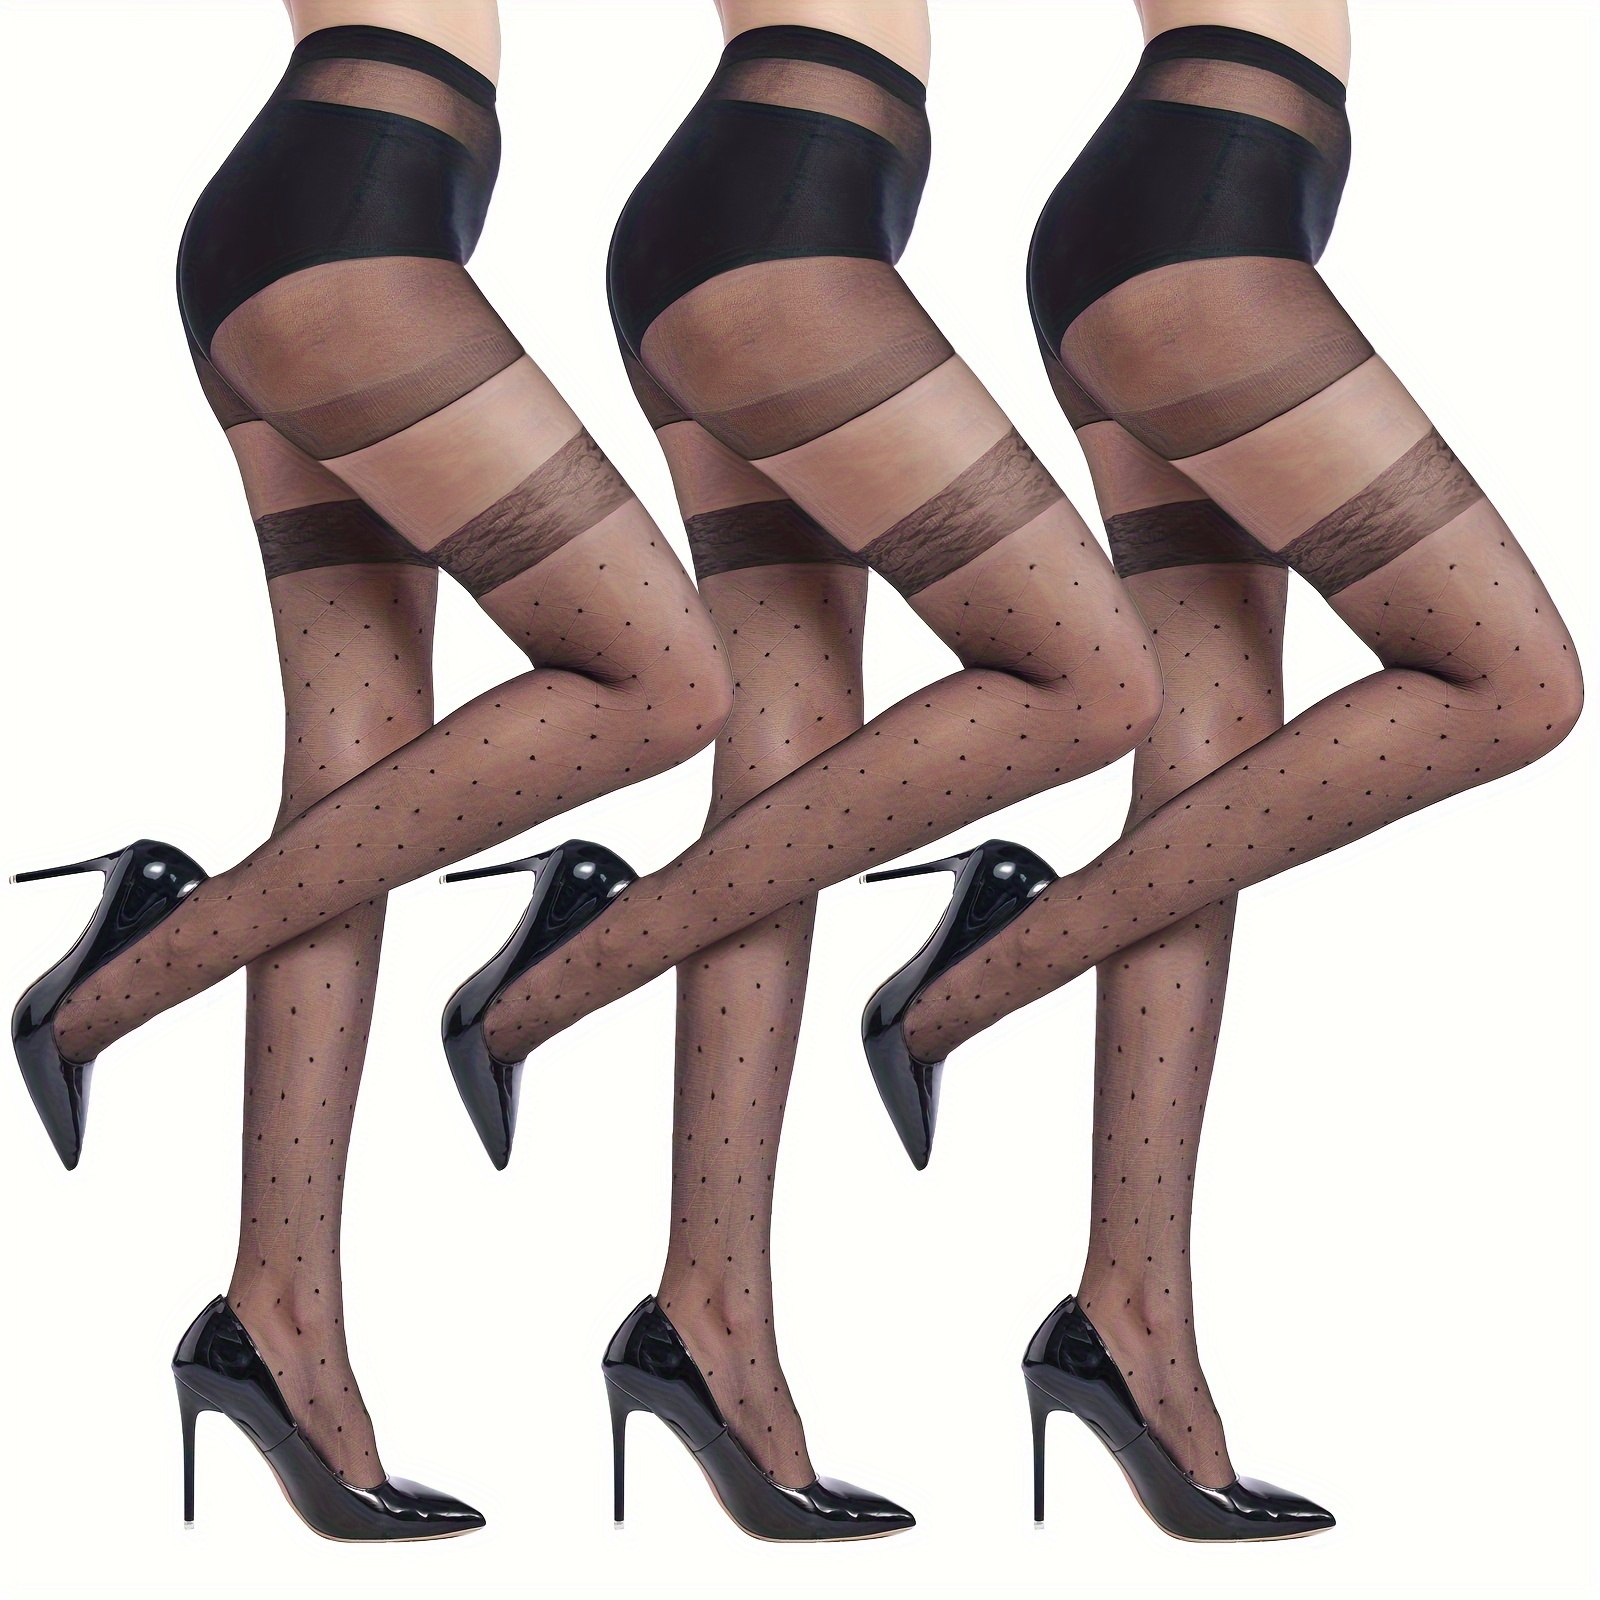 3 Pairs Women's Sheer Tights - Control Top Pantyhose(black